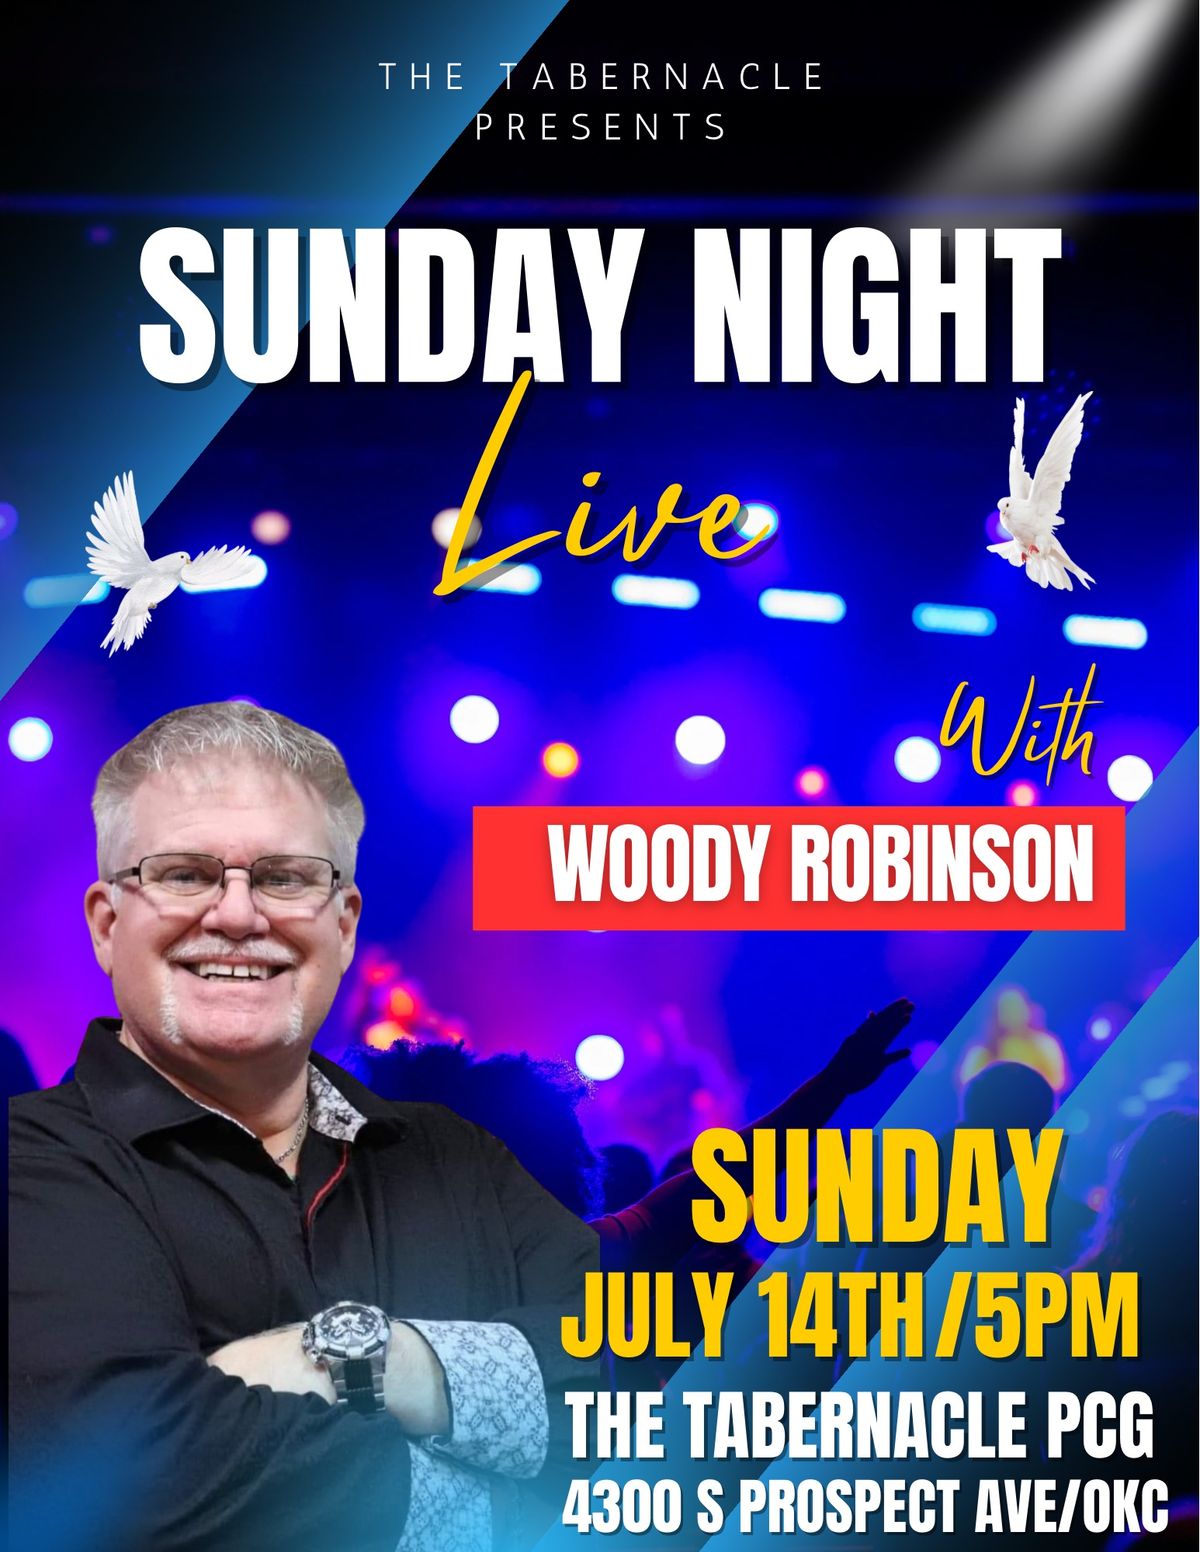 Sunday night live with Woody Robinson